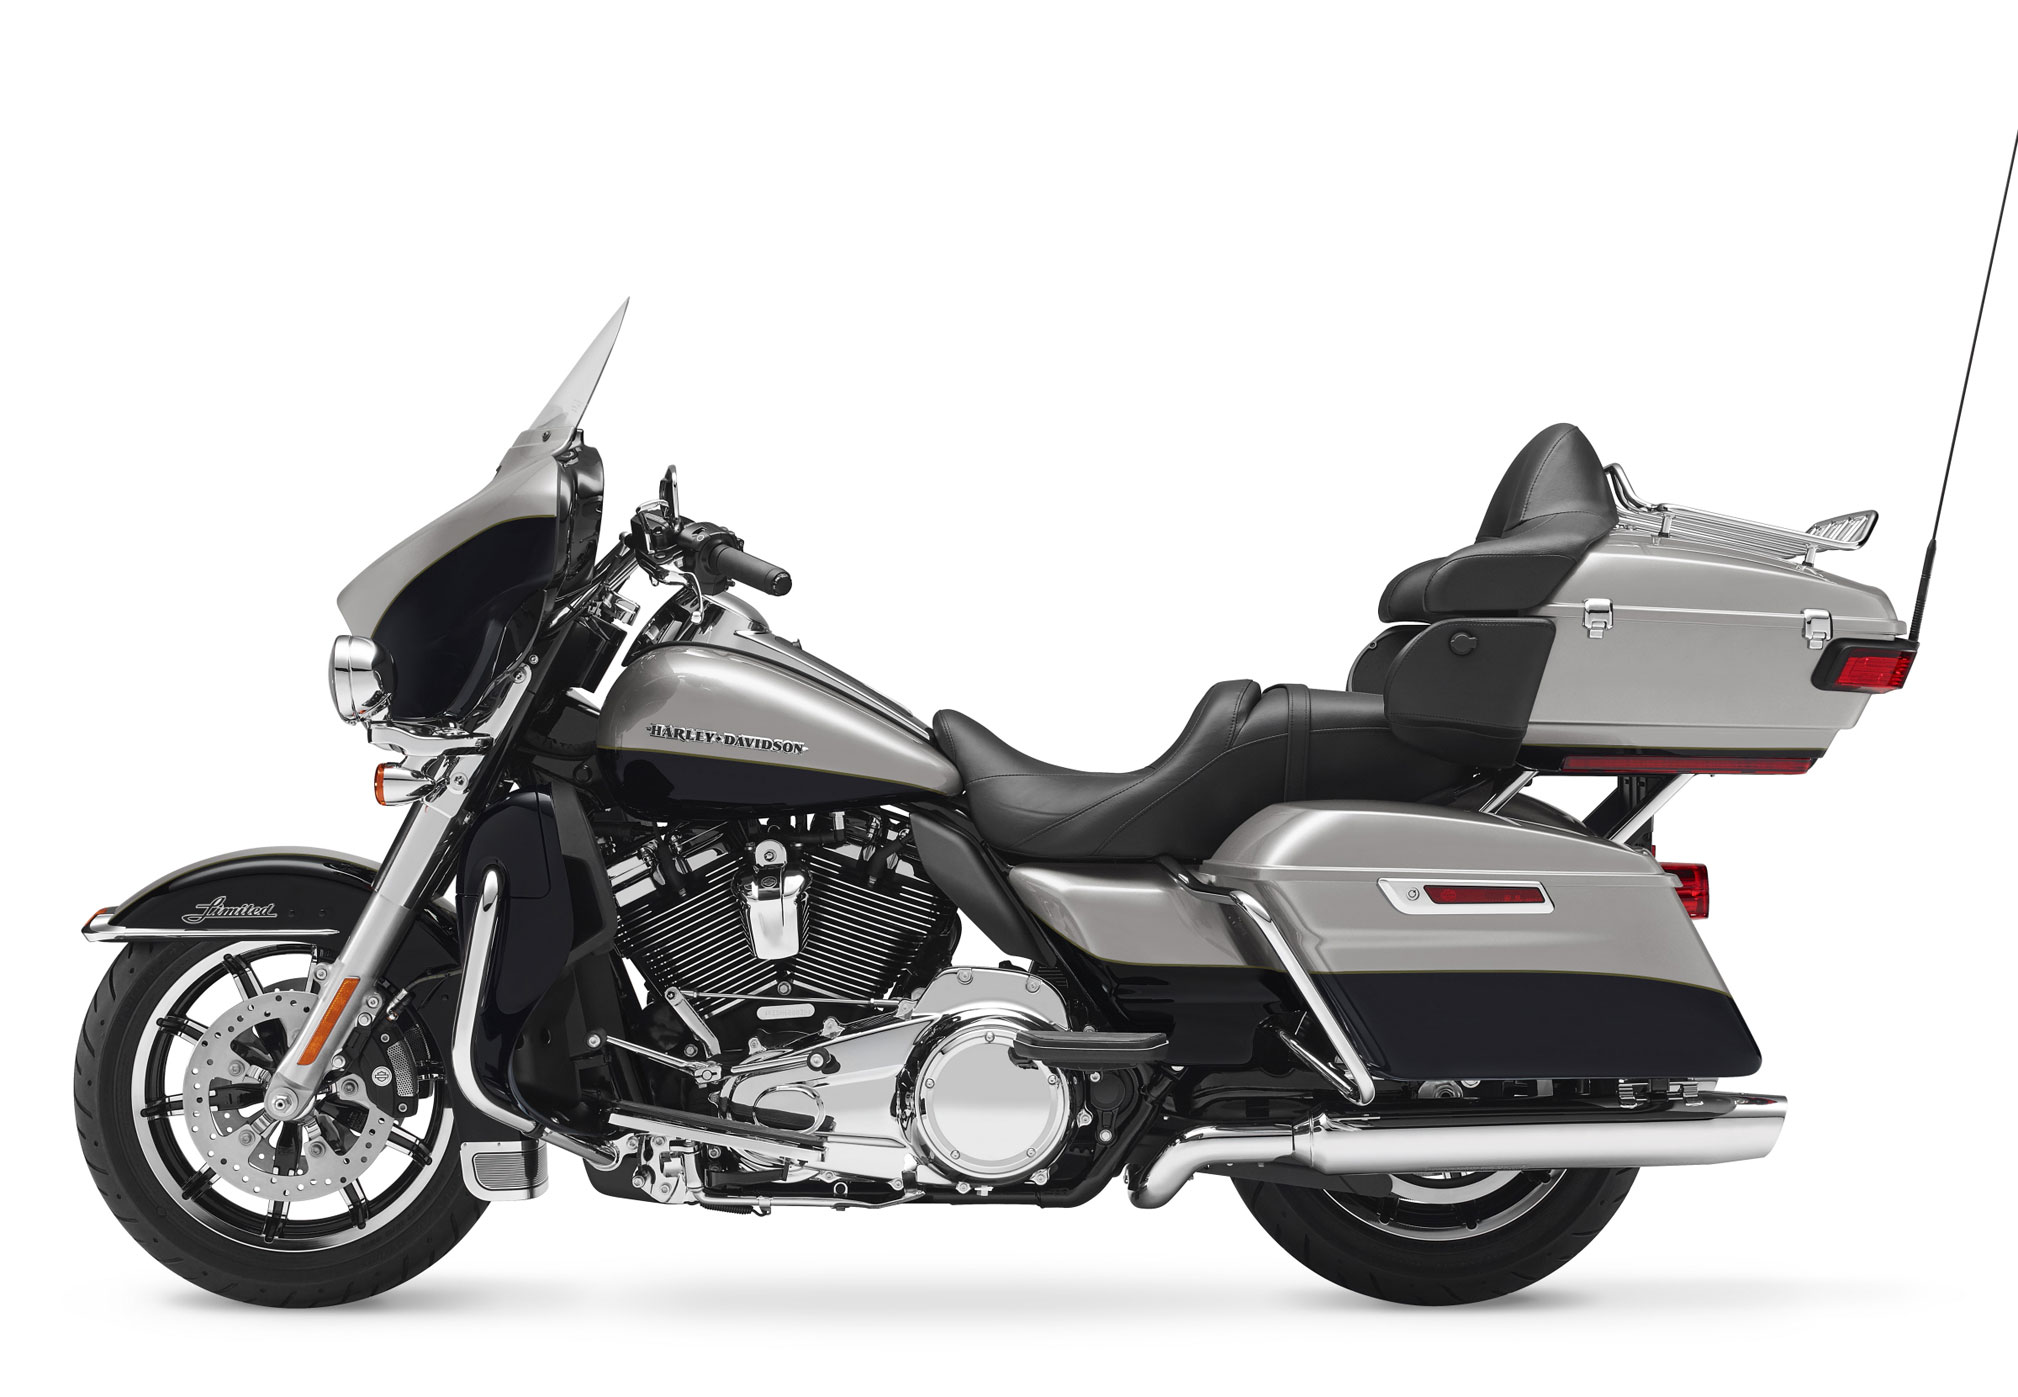 New 2021 Harley Davidson Ultra Limited Motorcycles In Kokomo In 601828 Vivid Black Black Pearl Option